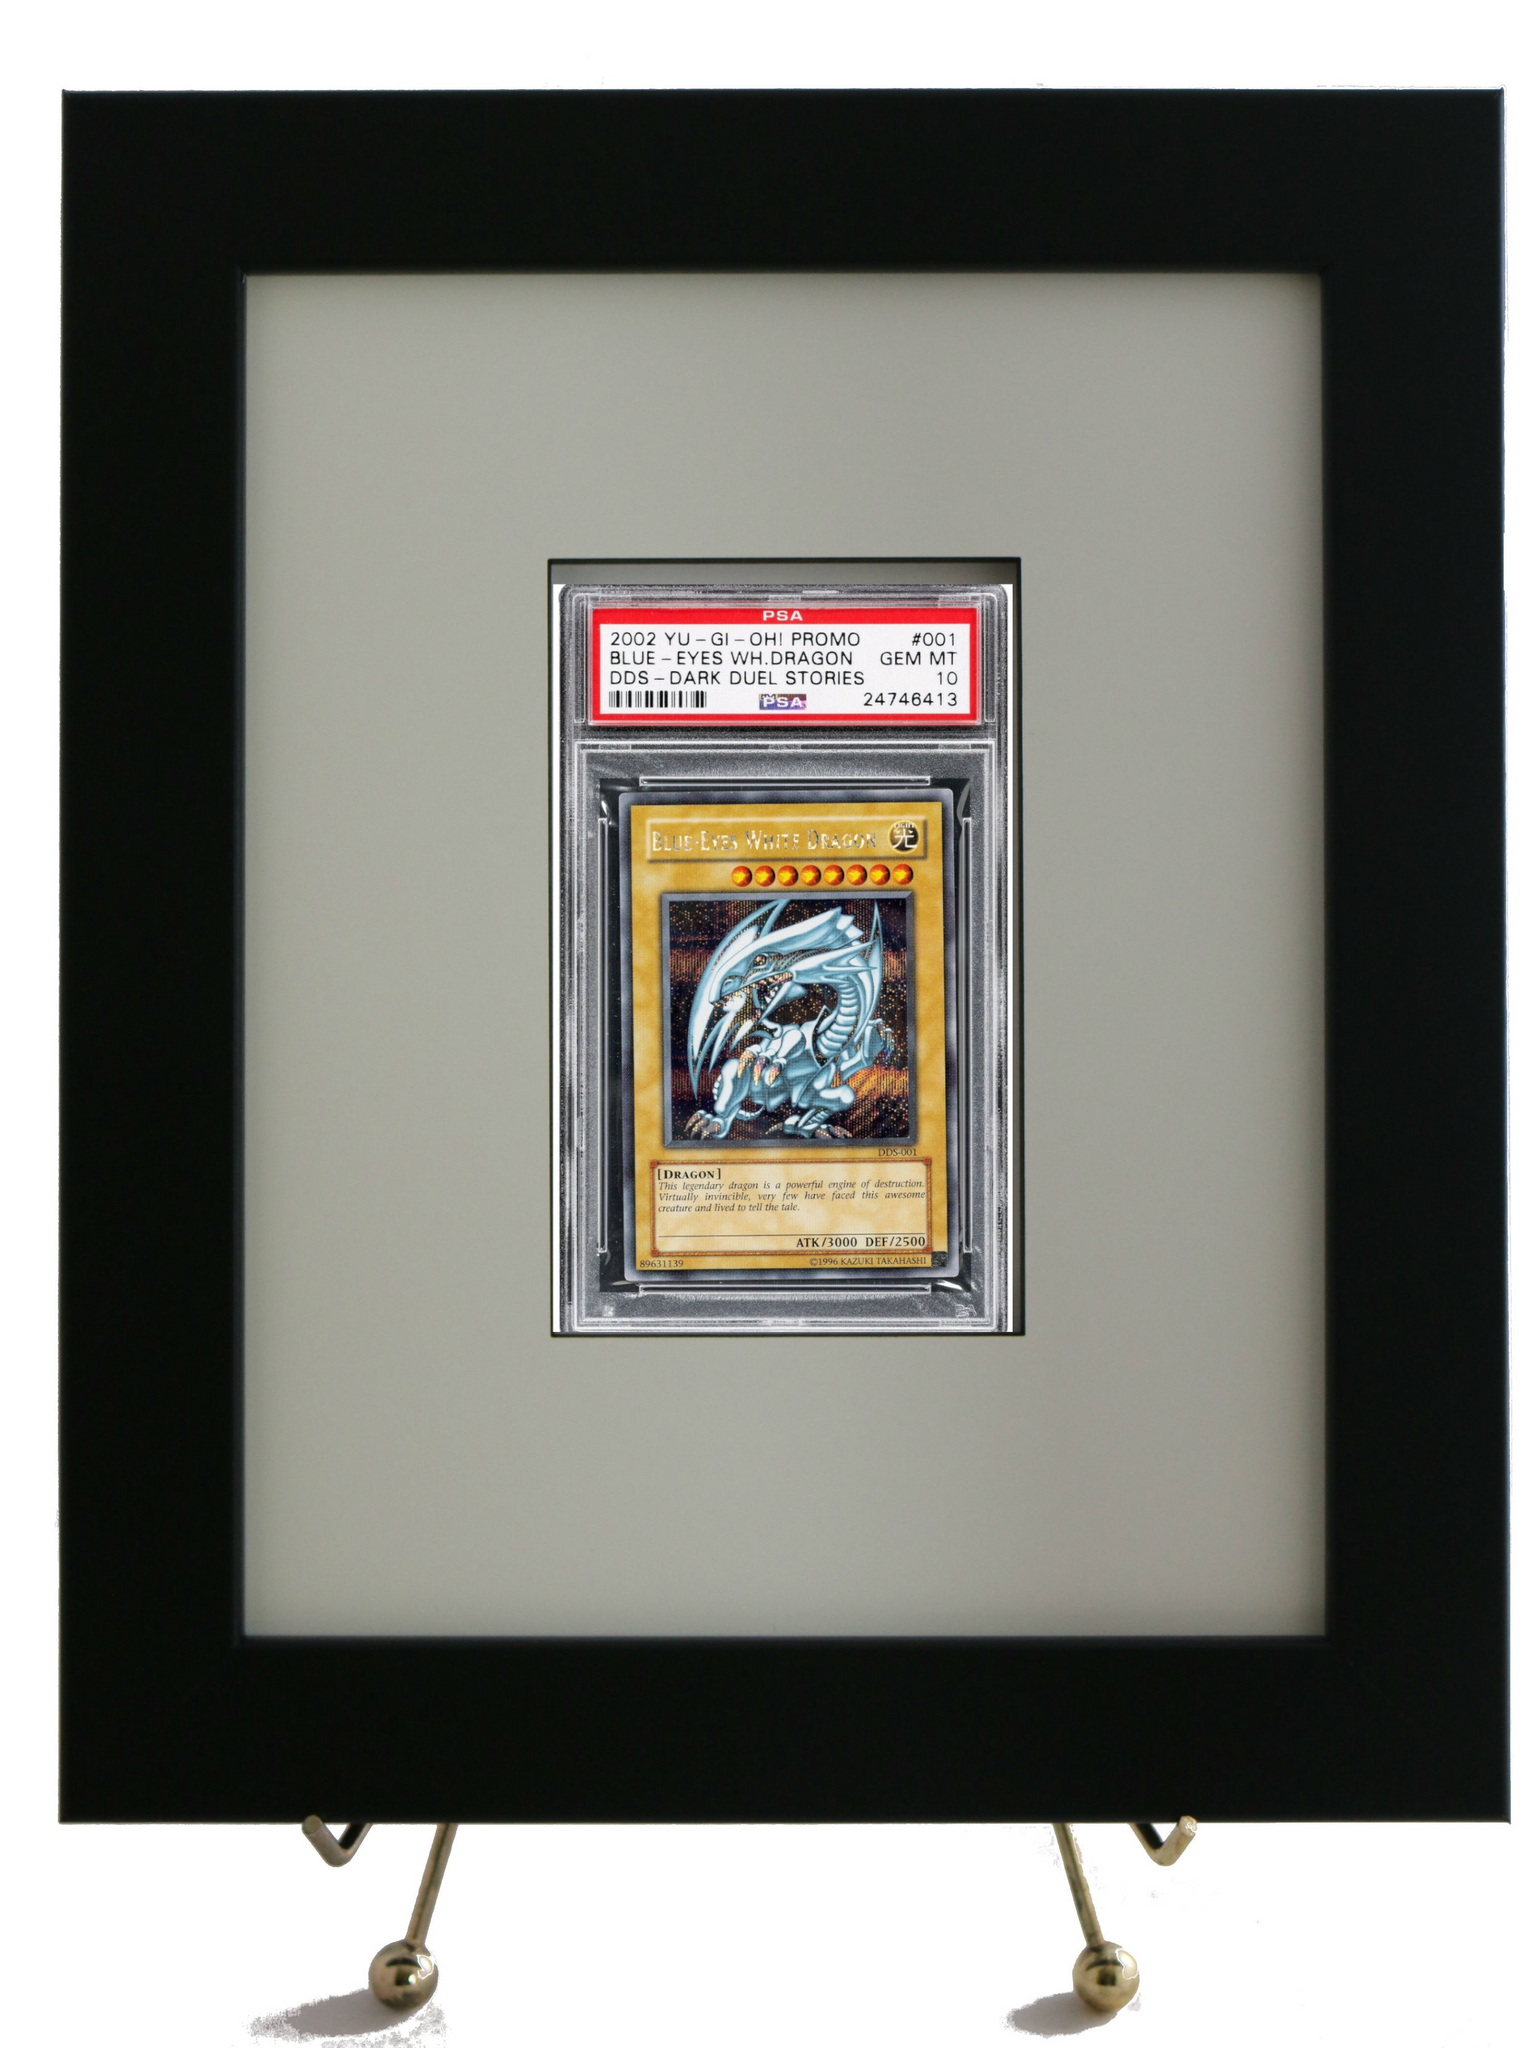 PSA Yu-Gi-Oh Card Framed Display-New Larger White Design - Graded And Framed